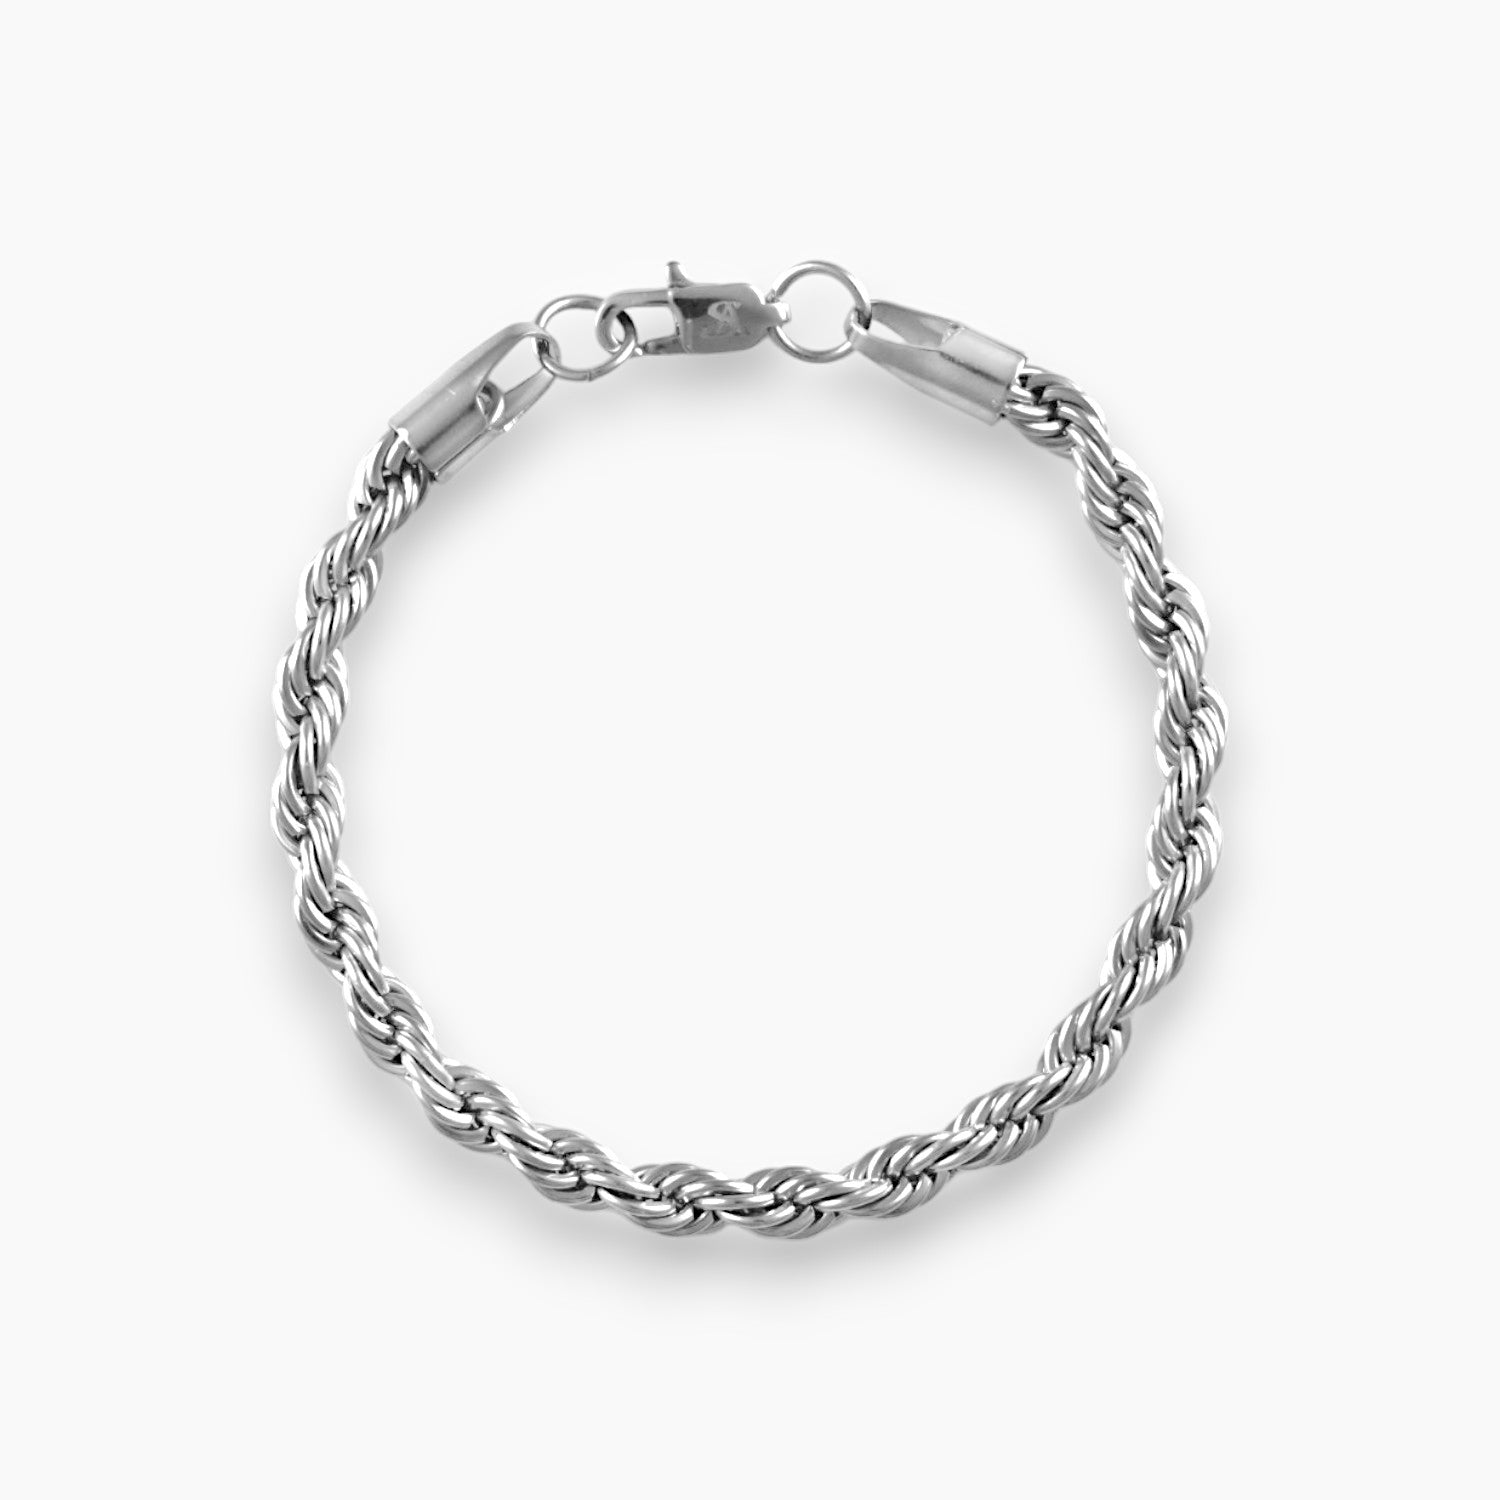 5mm silver rope bracelet